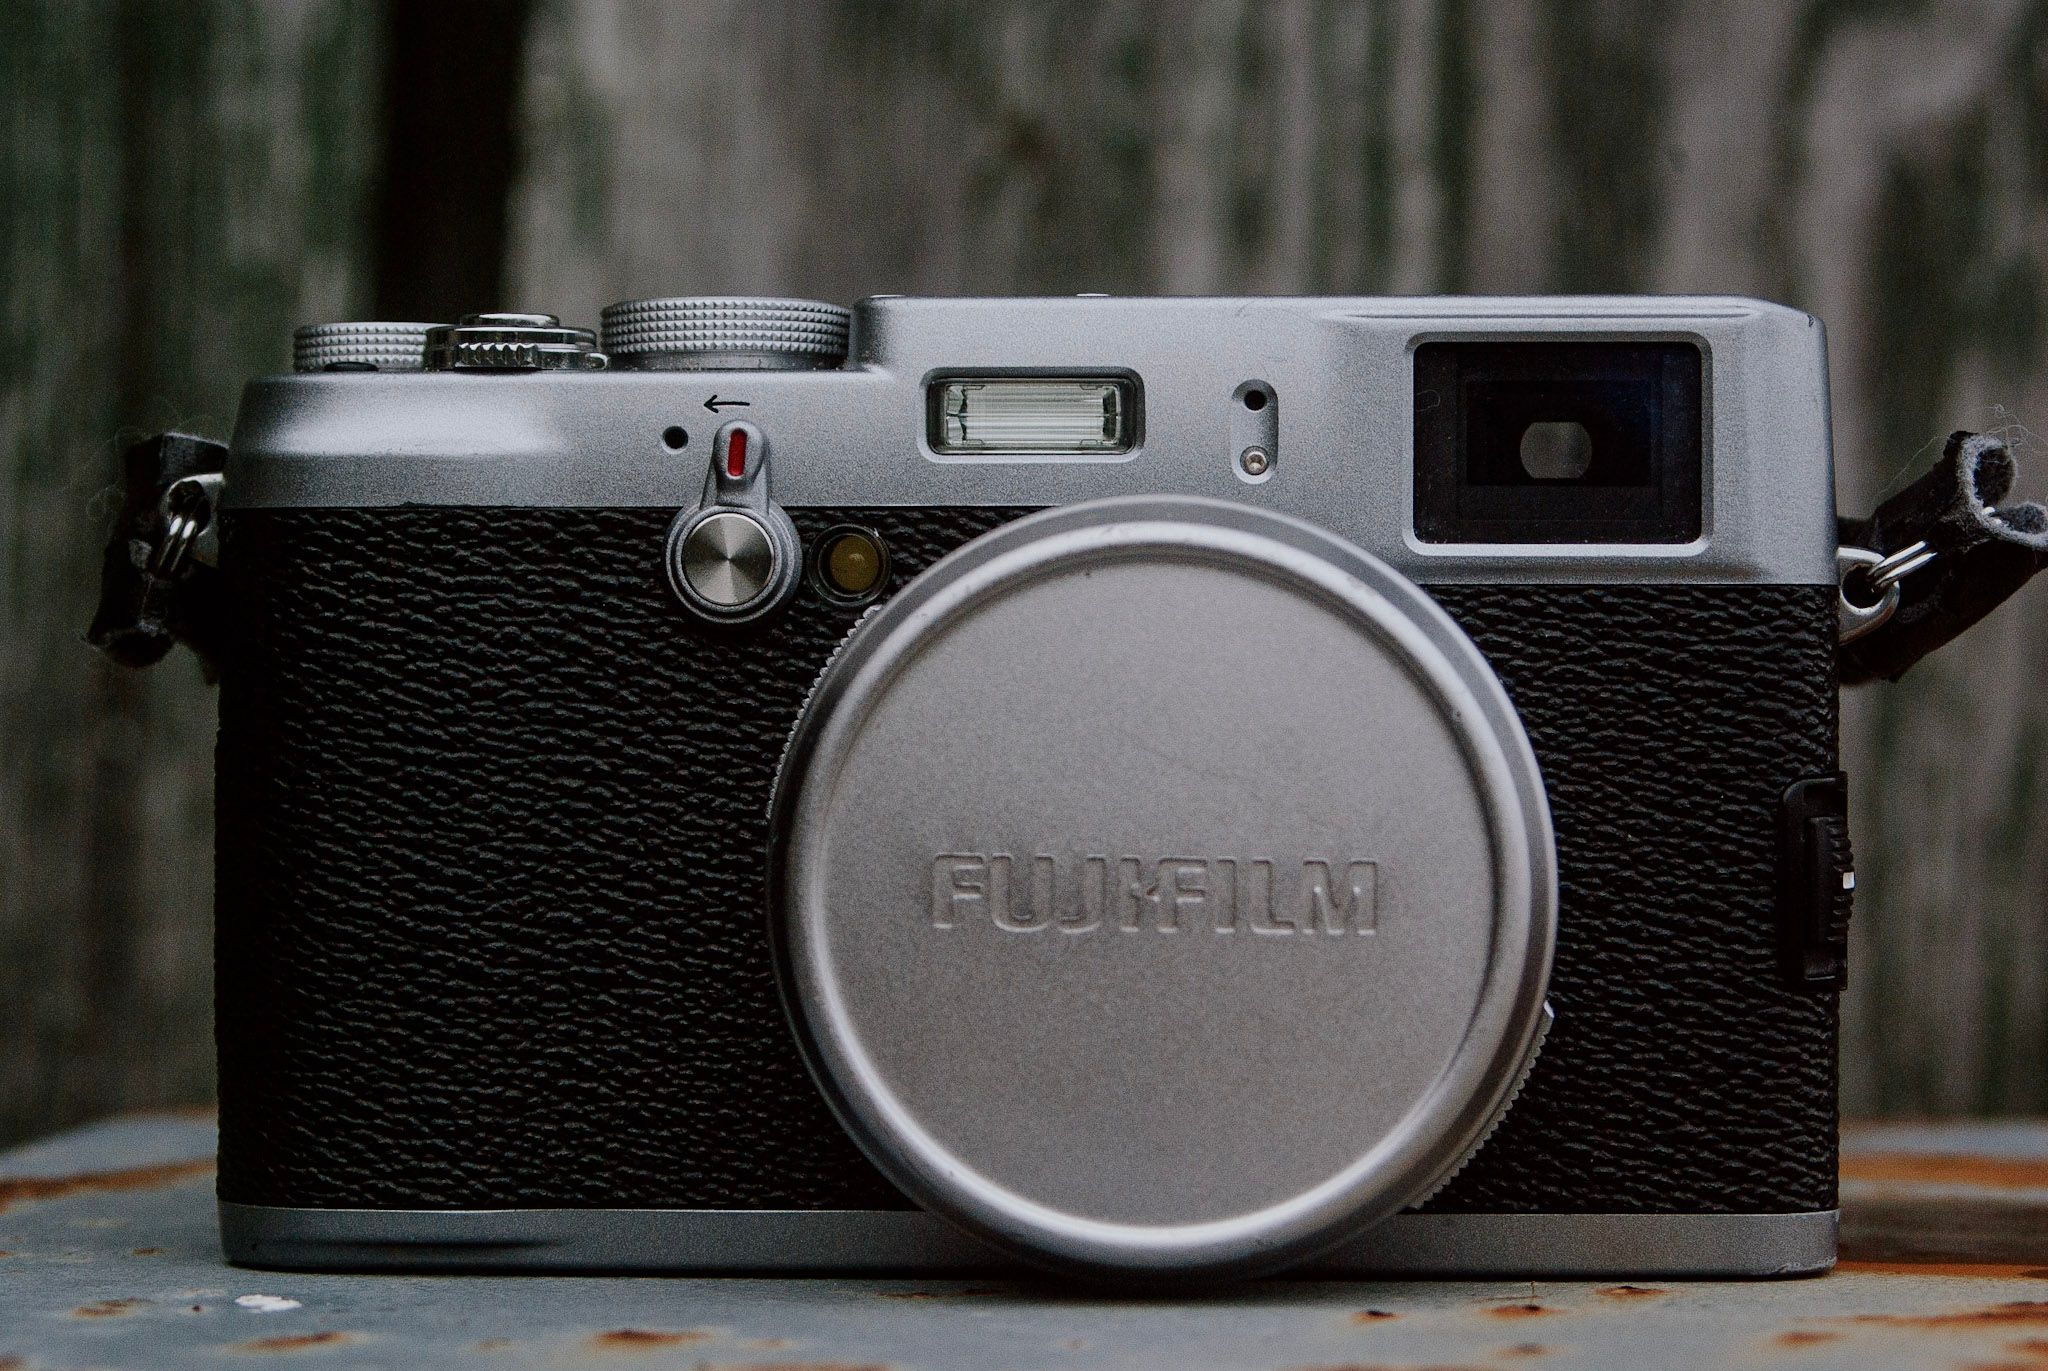 Using The Original Fujifilm X100 In 2021 - 50mmF2